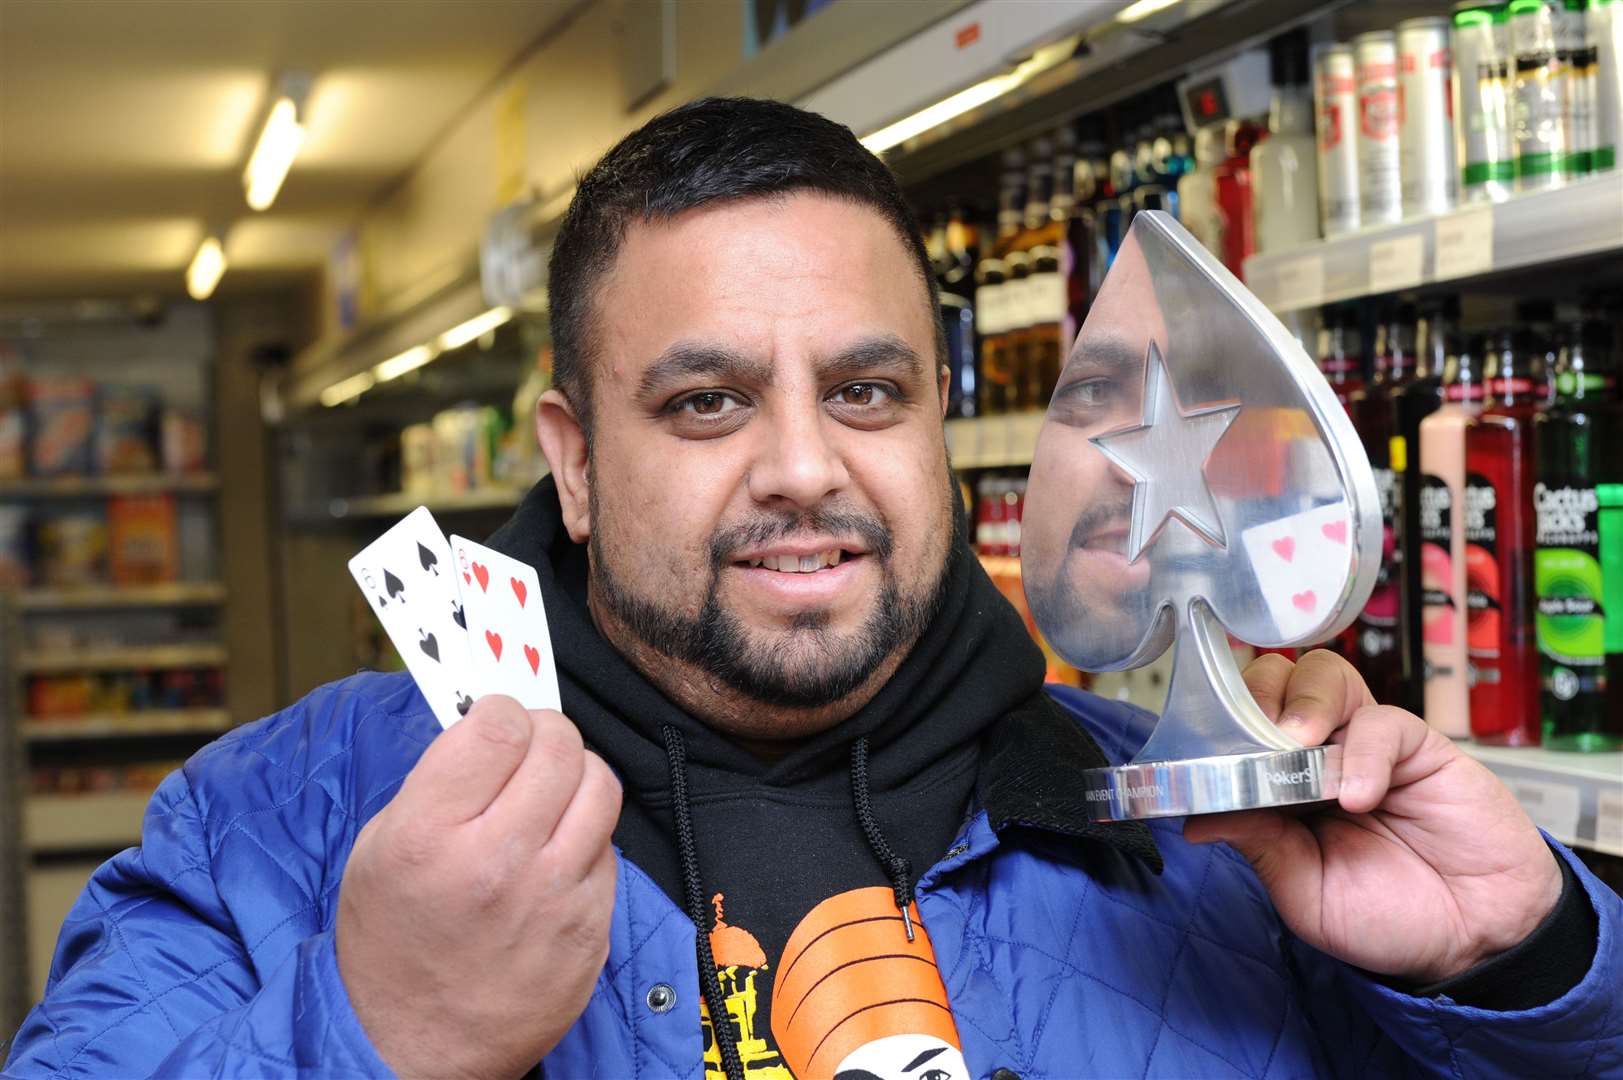 Rapinder Singh Cheema will be gambling on success on charity roadtrip